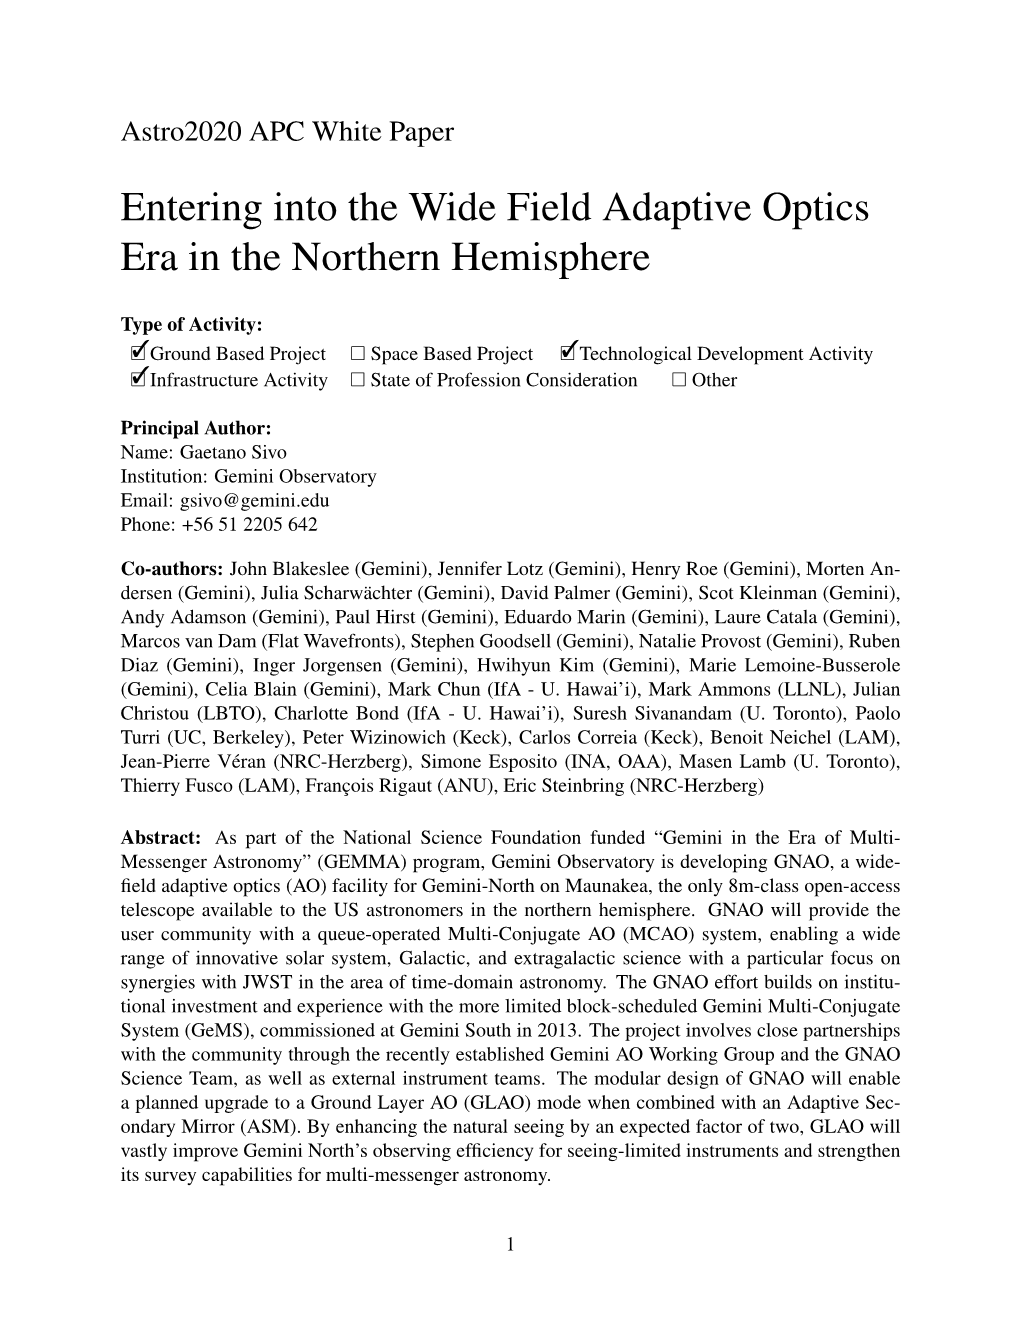 Entering Into the Wide Field Adaptive Optics Era in the Northern Hemisphere